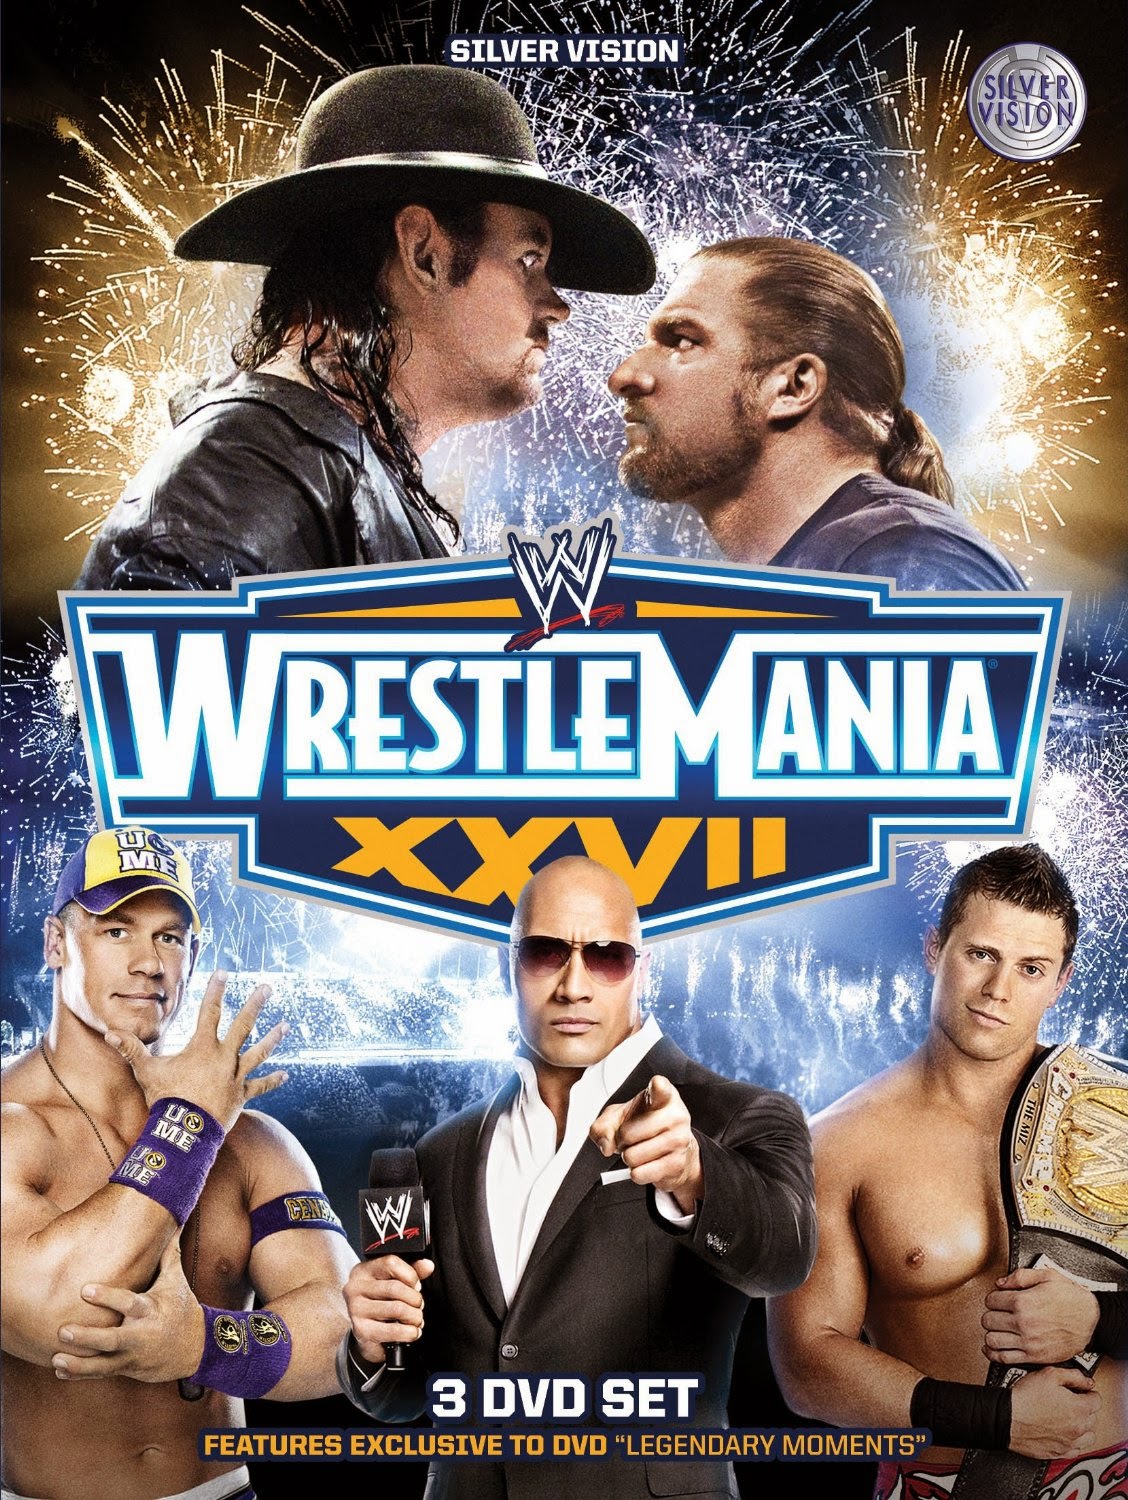 WWE: WrestleMania 38 (DVD)